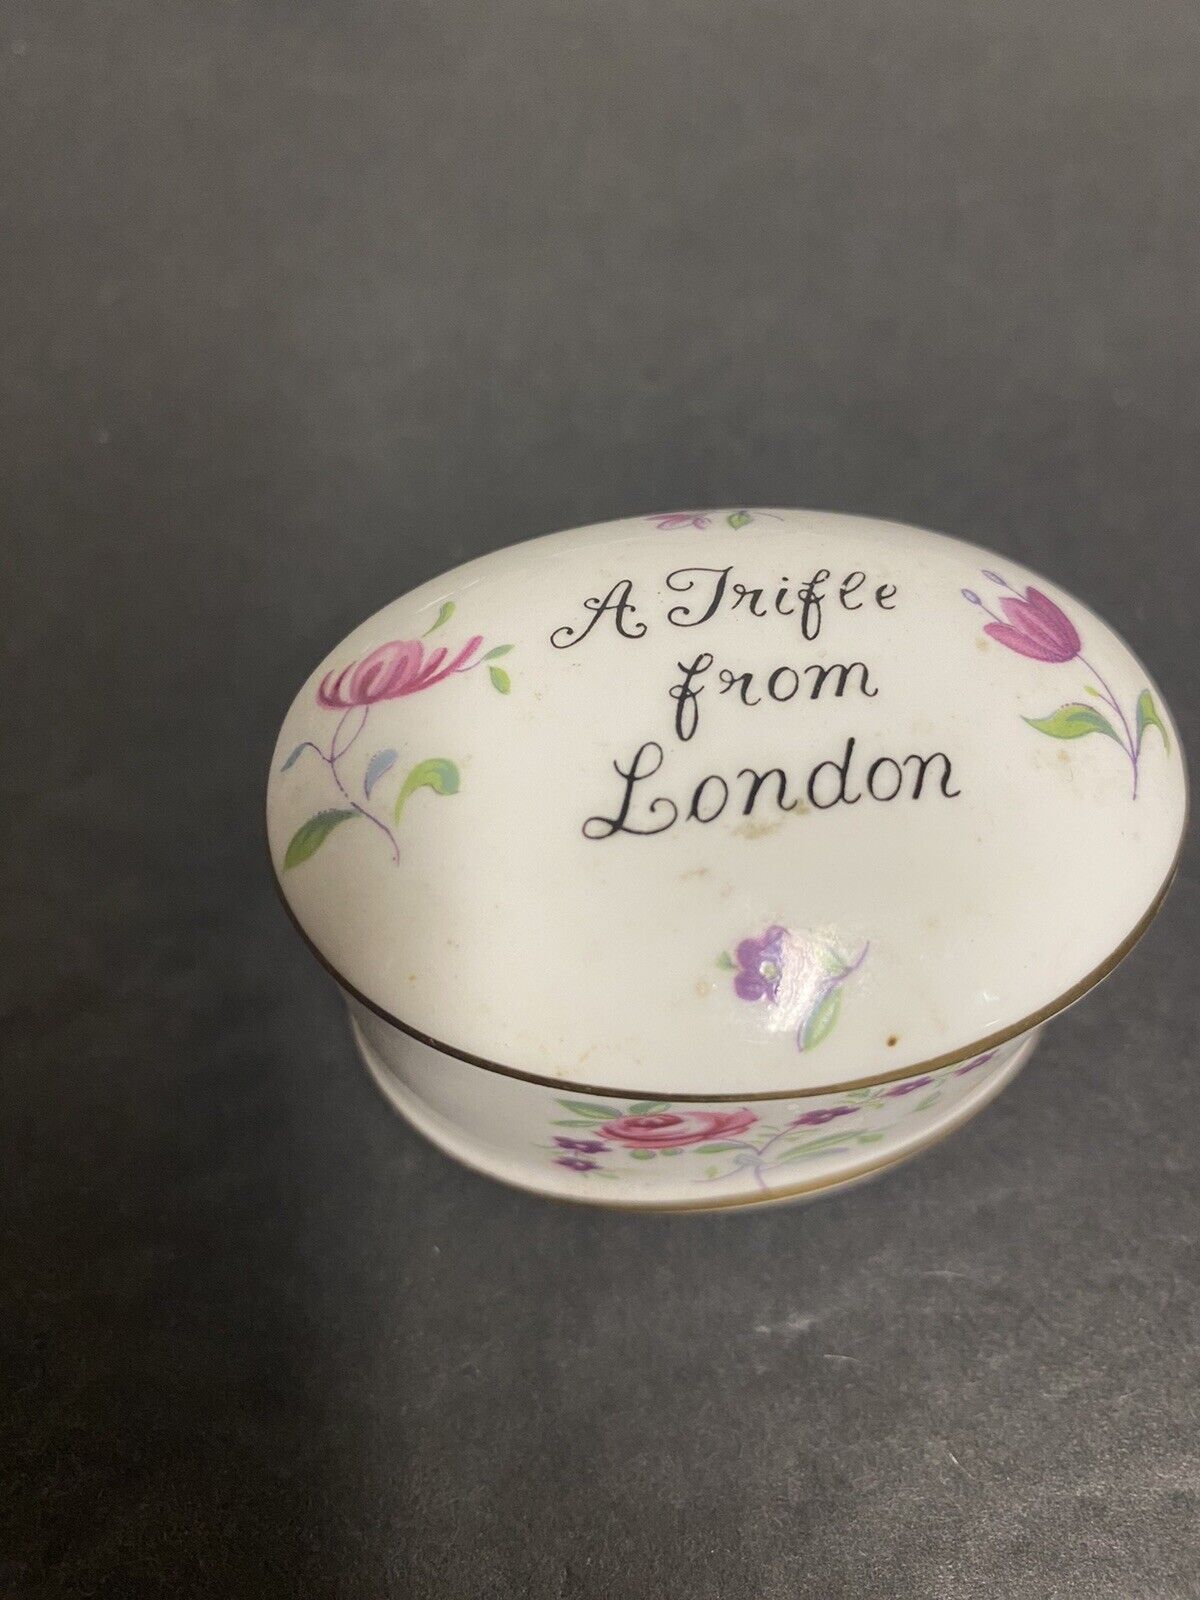 VTG CROWN Staffordshire England Trinket Box from London Bone China #483